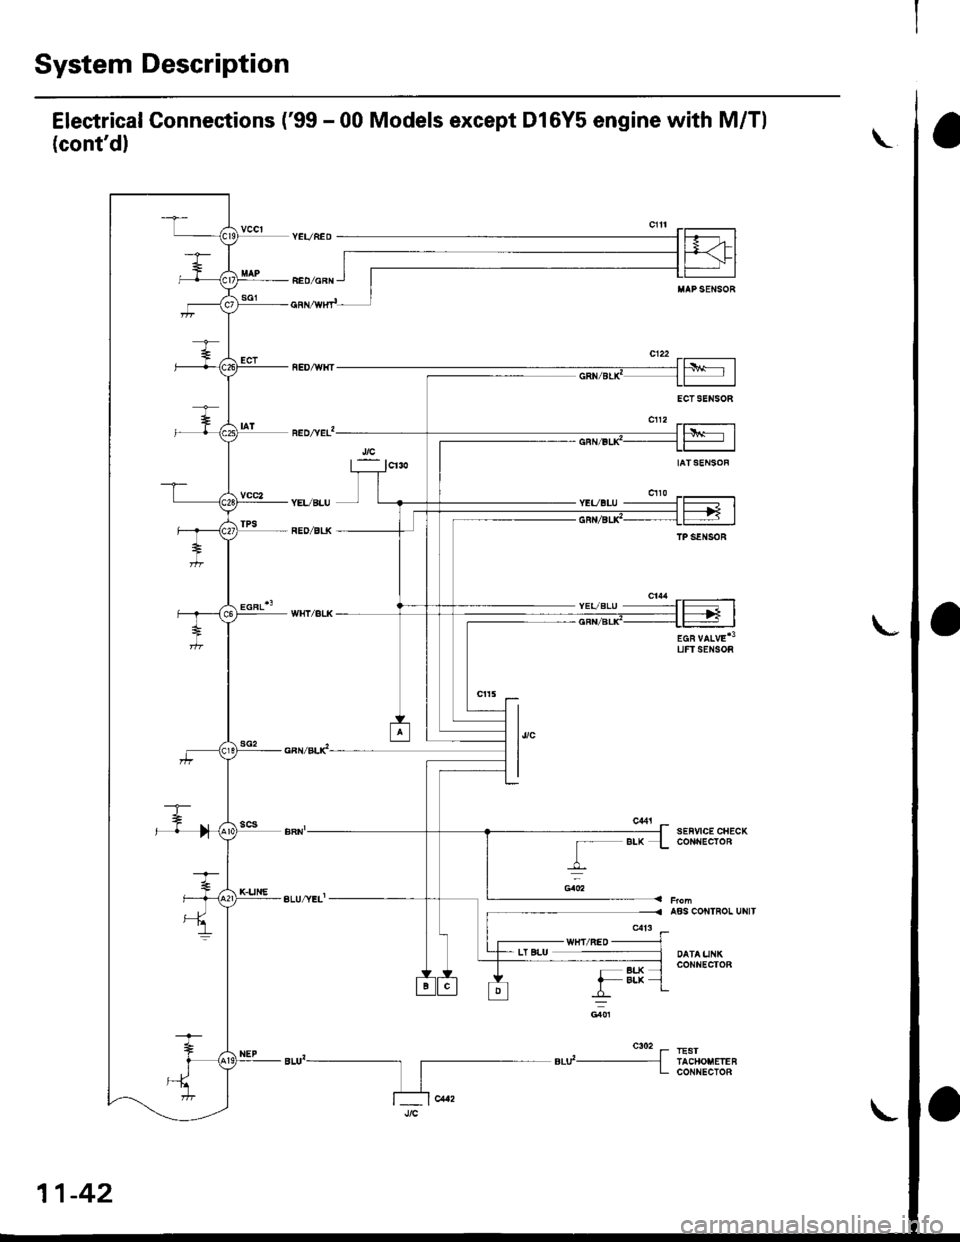 HONDA CIVIC 1998 6.G User Guide System Description
Electrical Connections (99 - 00 Models except D16Y5 engine with M/Tl
(contdl
UFTSENSOR
L
ABS CONTROL UNIT
CONI{ECTOR- BLX
_r "*
\
sEnucE cSEcKCONNECOR
11-42
aLul- _--r ".* 
"to 